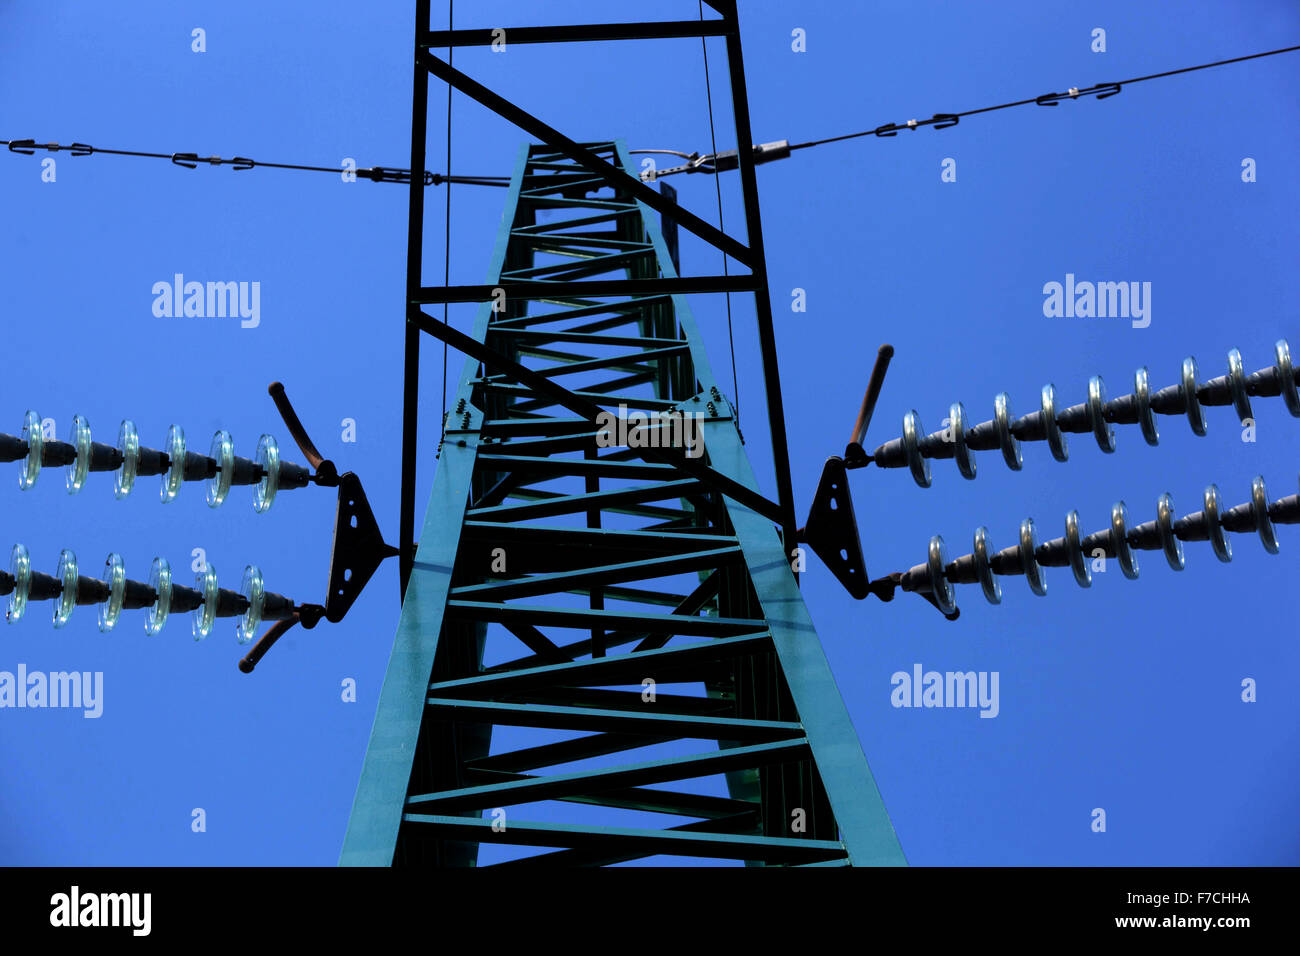 Isolators on Power lines, wires in sky Czech Republic Stock Photo